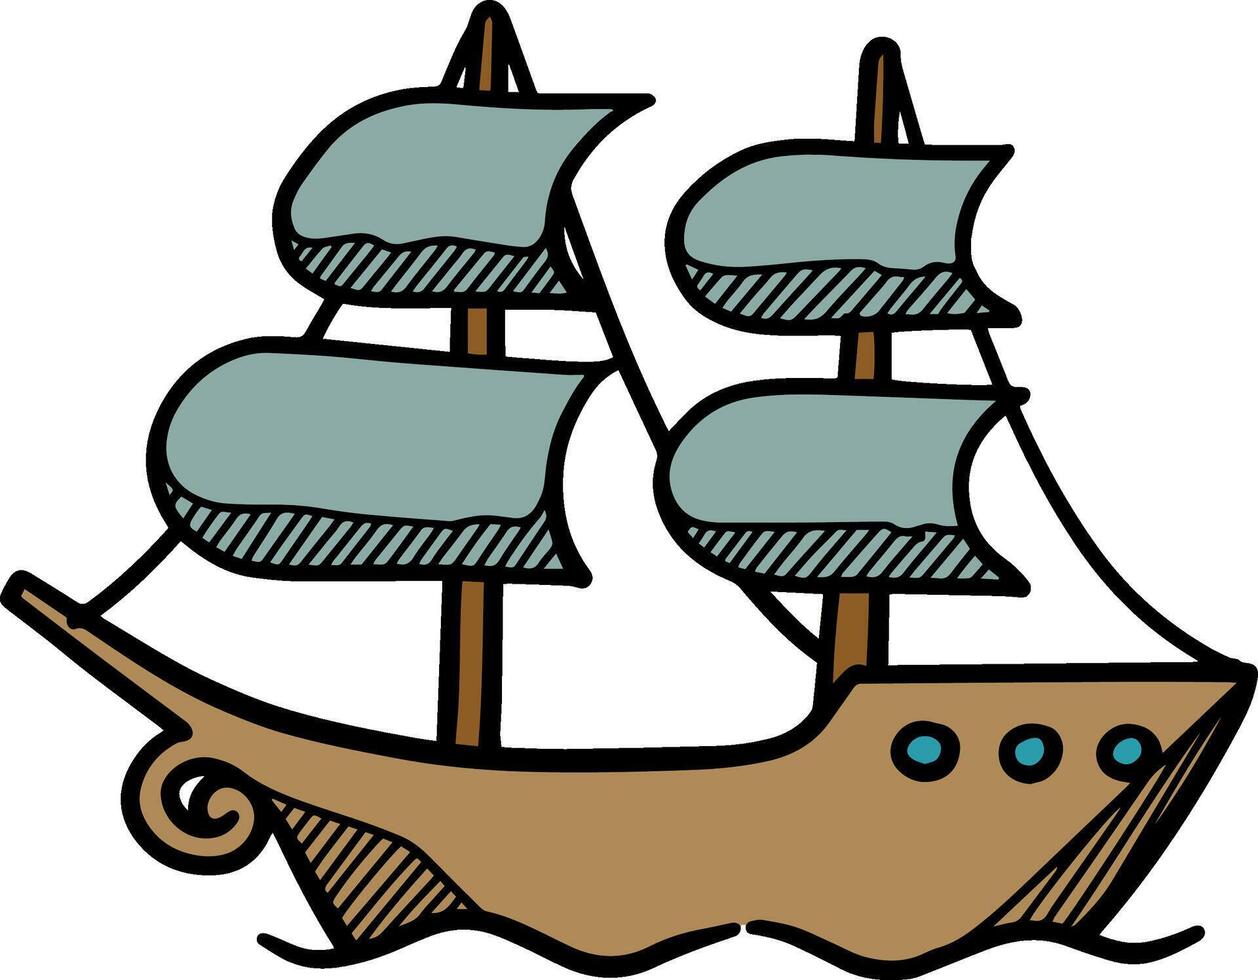 Pirate ship icon es hand drawn color vector illustration